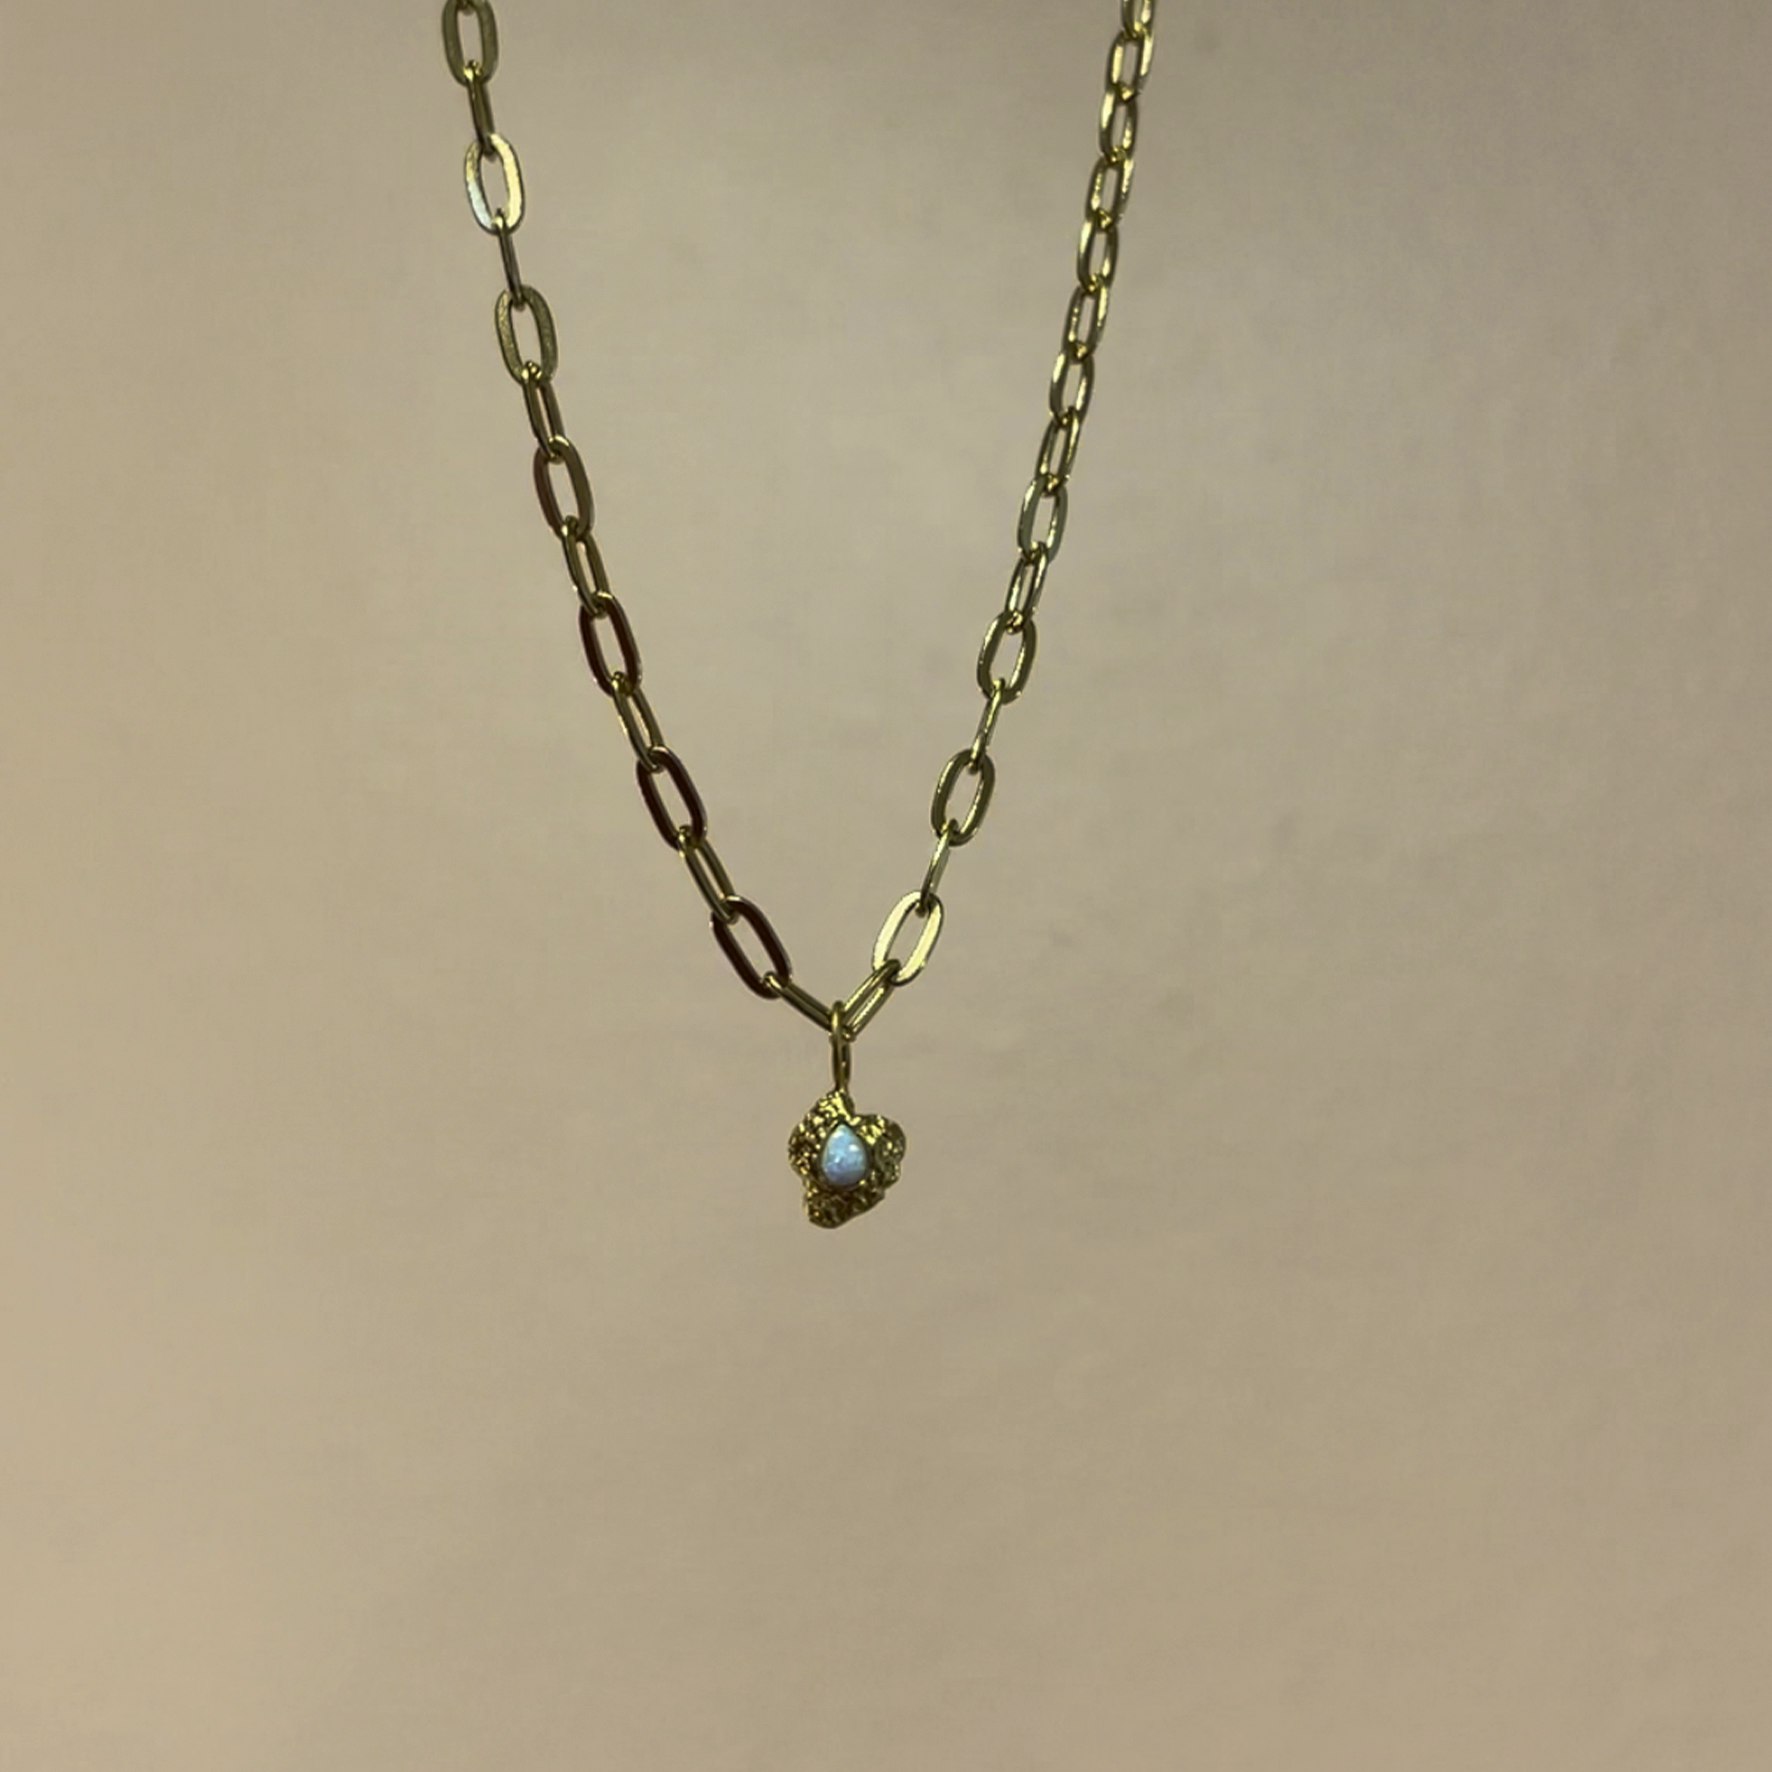 Ocean Glimpse Pendant With Opal fra STINE A Jewelry i Forgyldt-Sølv Sterling 925